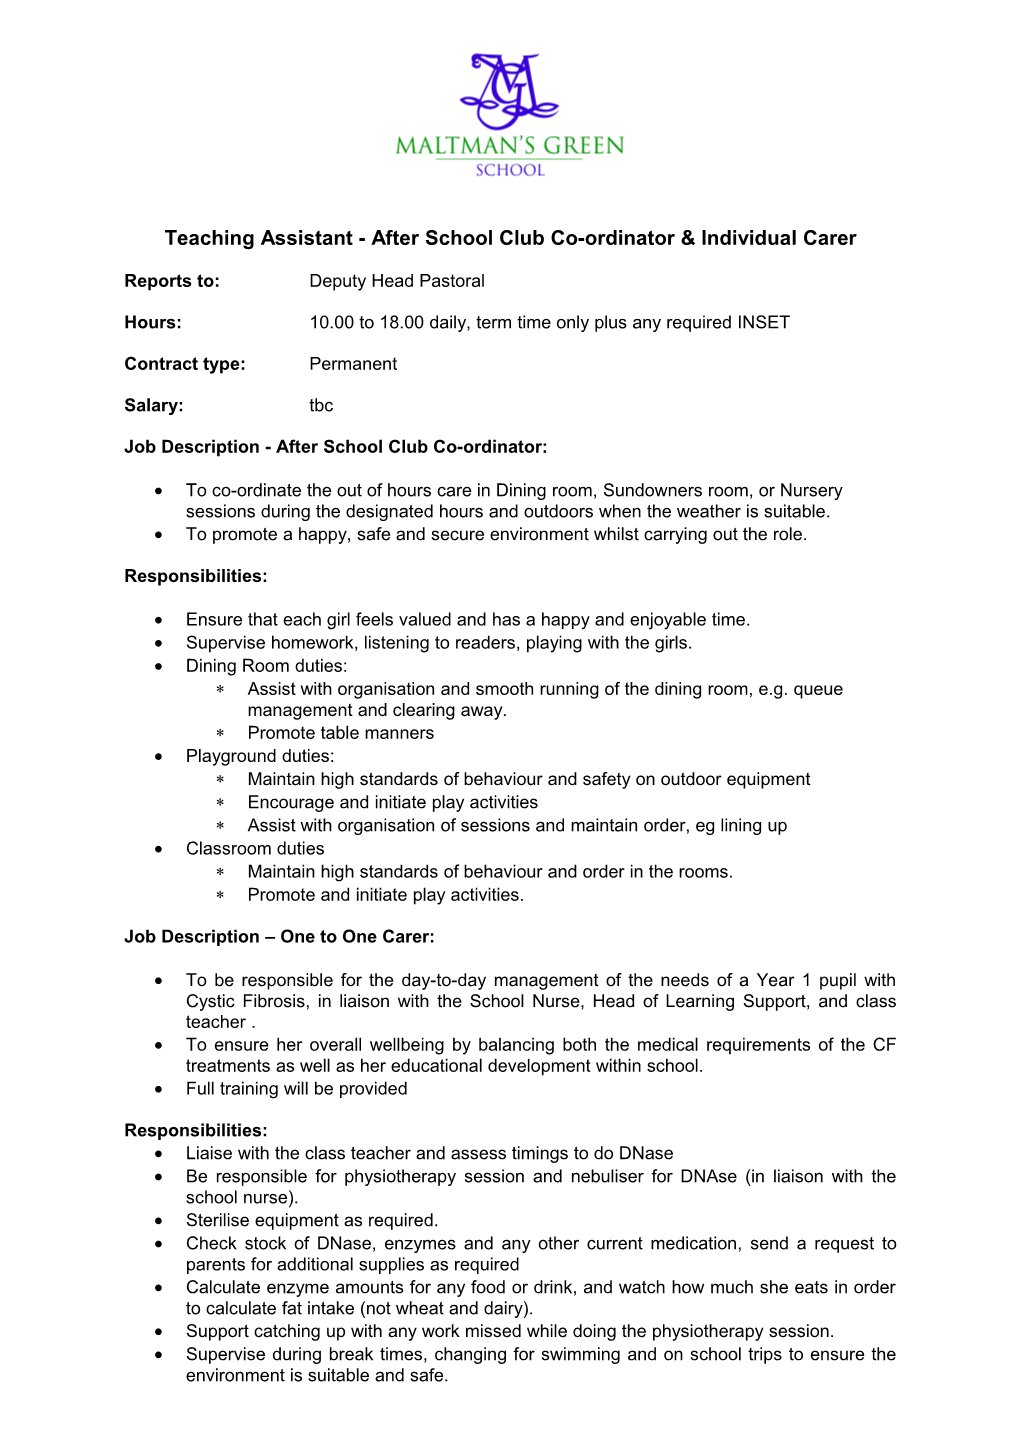 Teaching Assistant - After School Club Co-Ordinatorindividual Carer